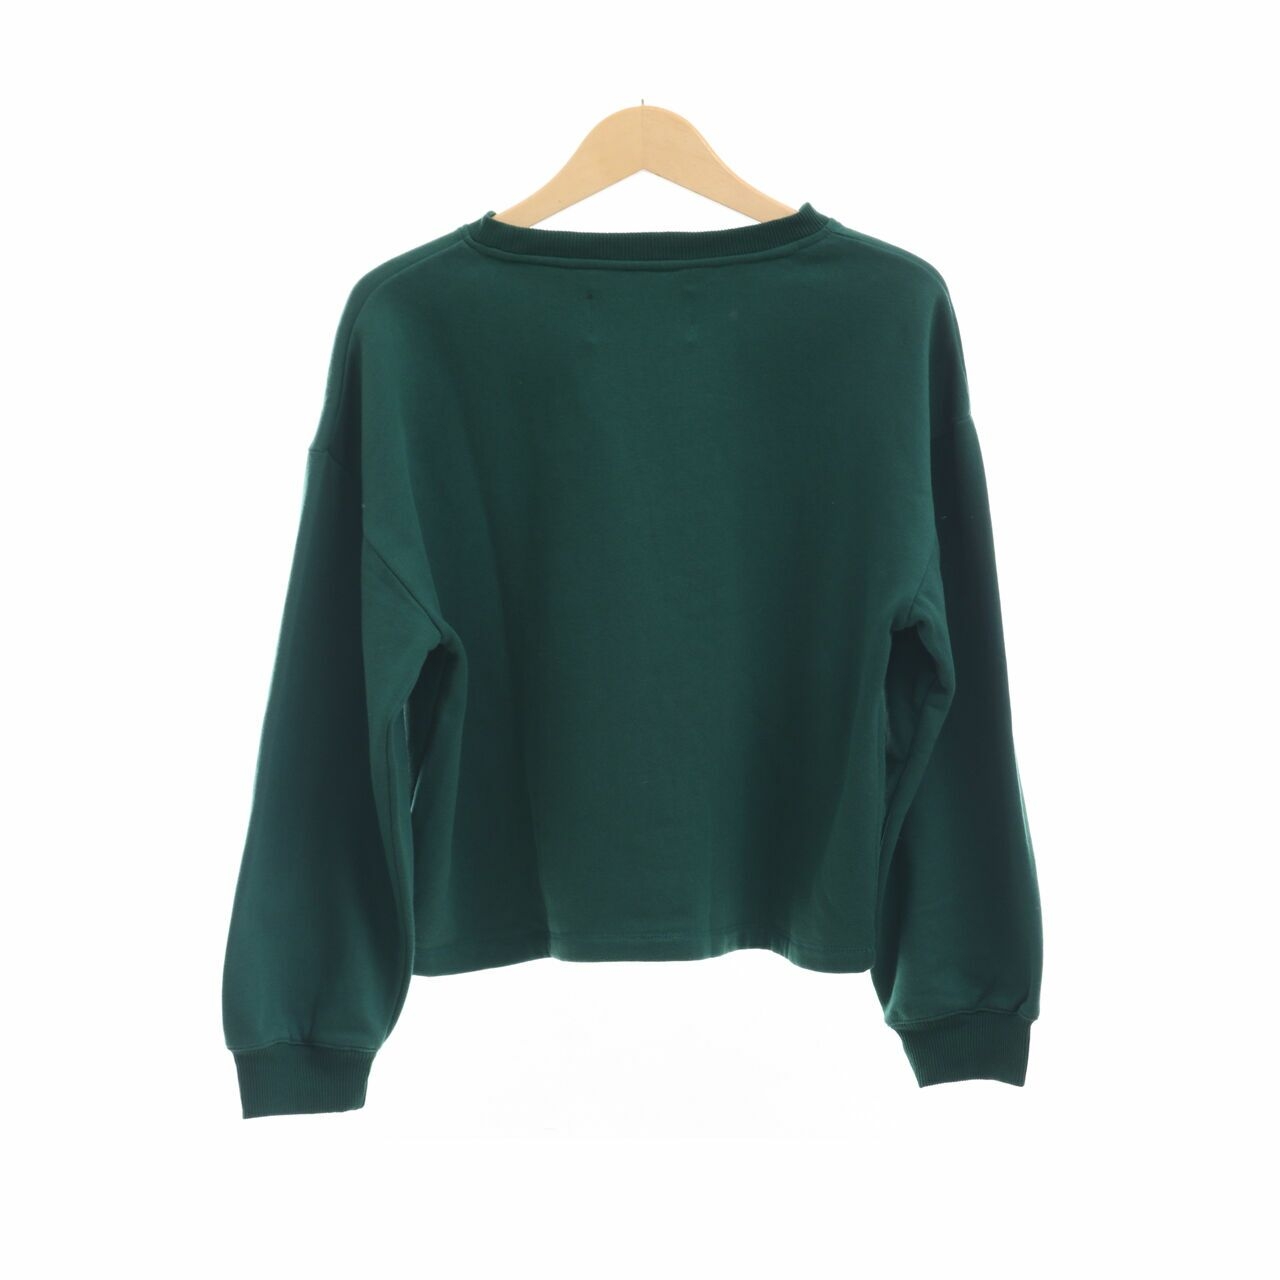 Berrybenka Green Sweater